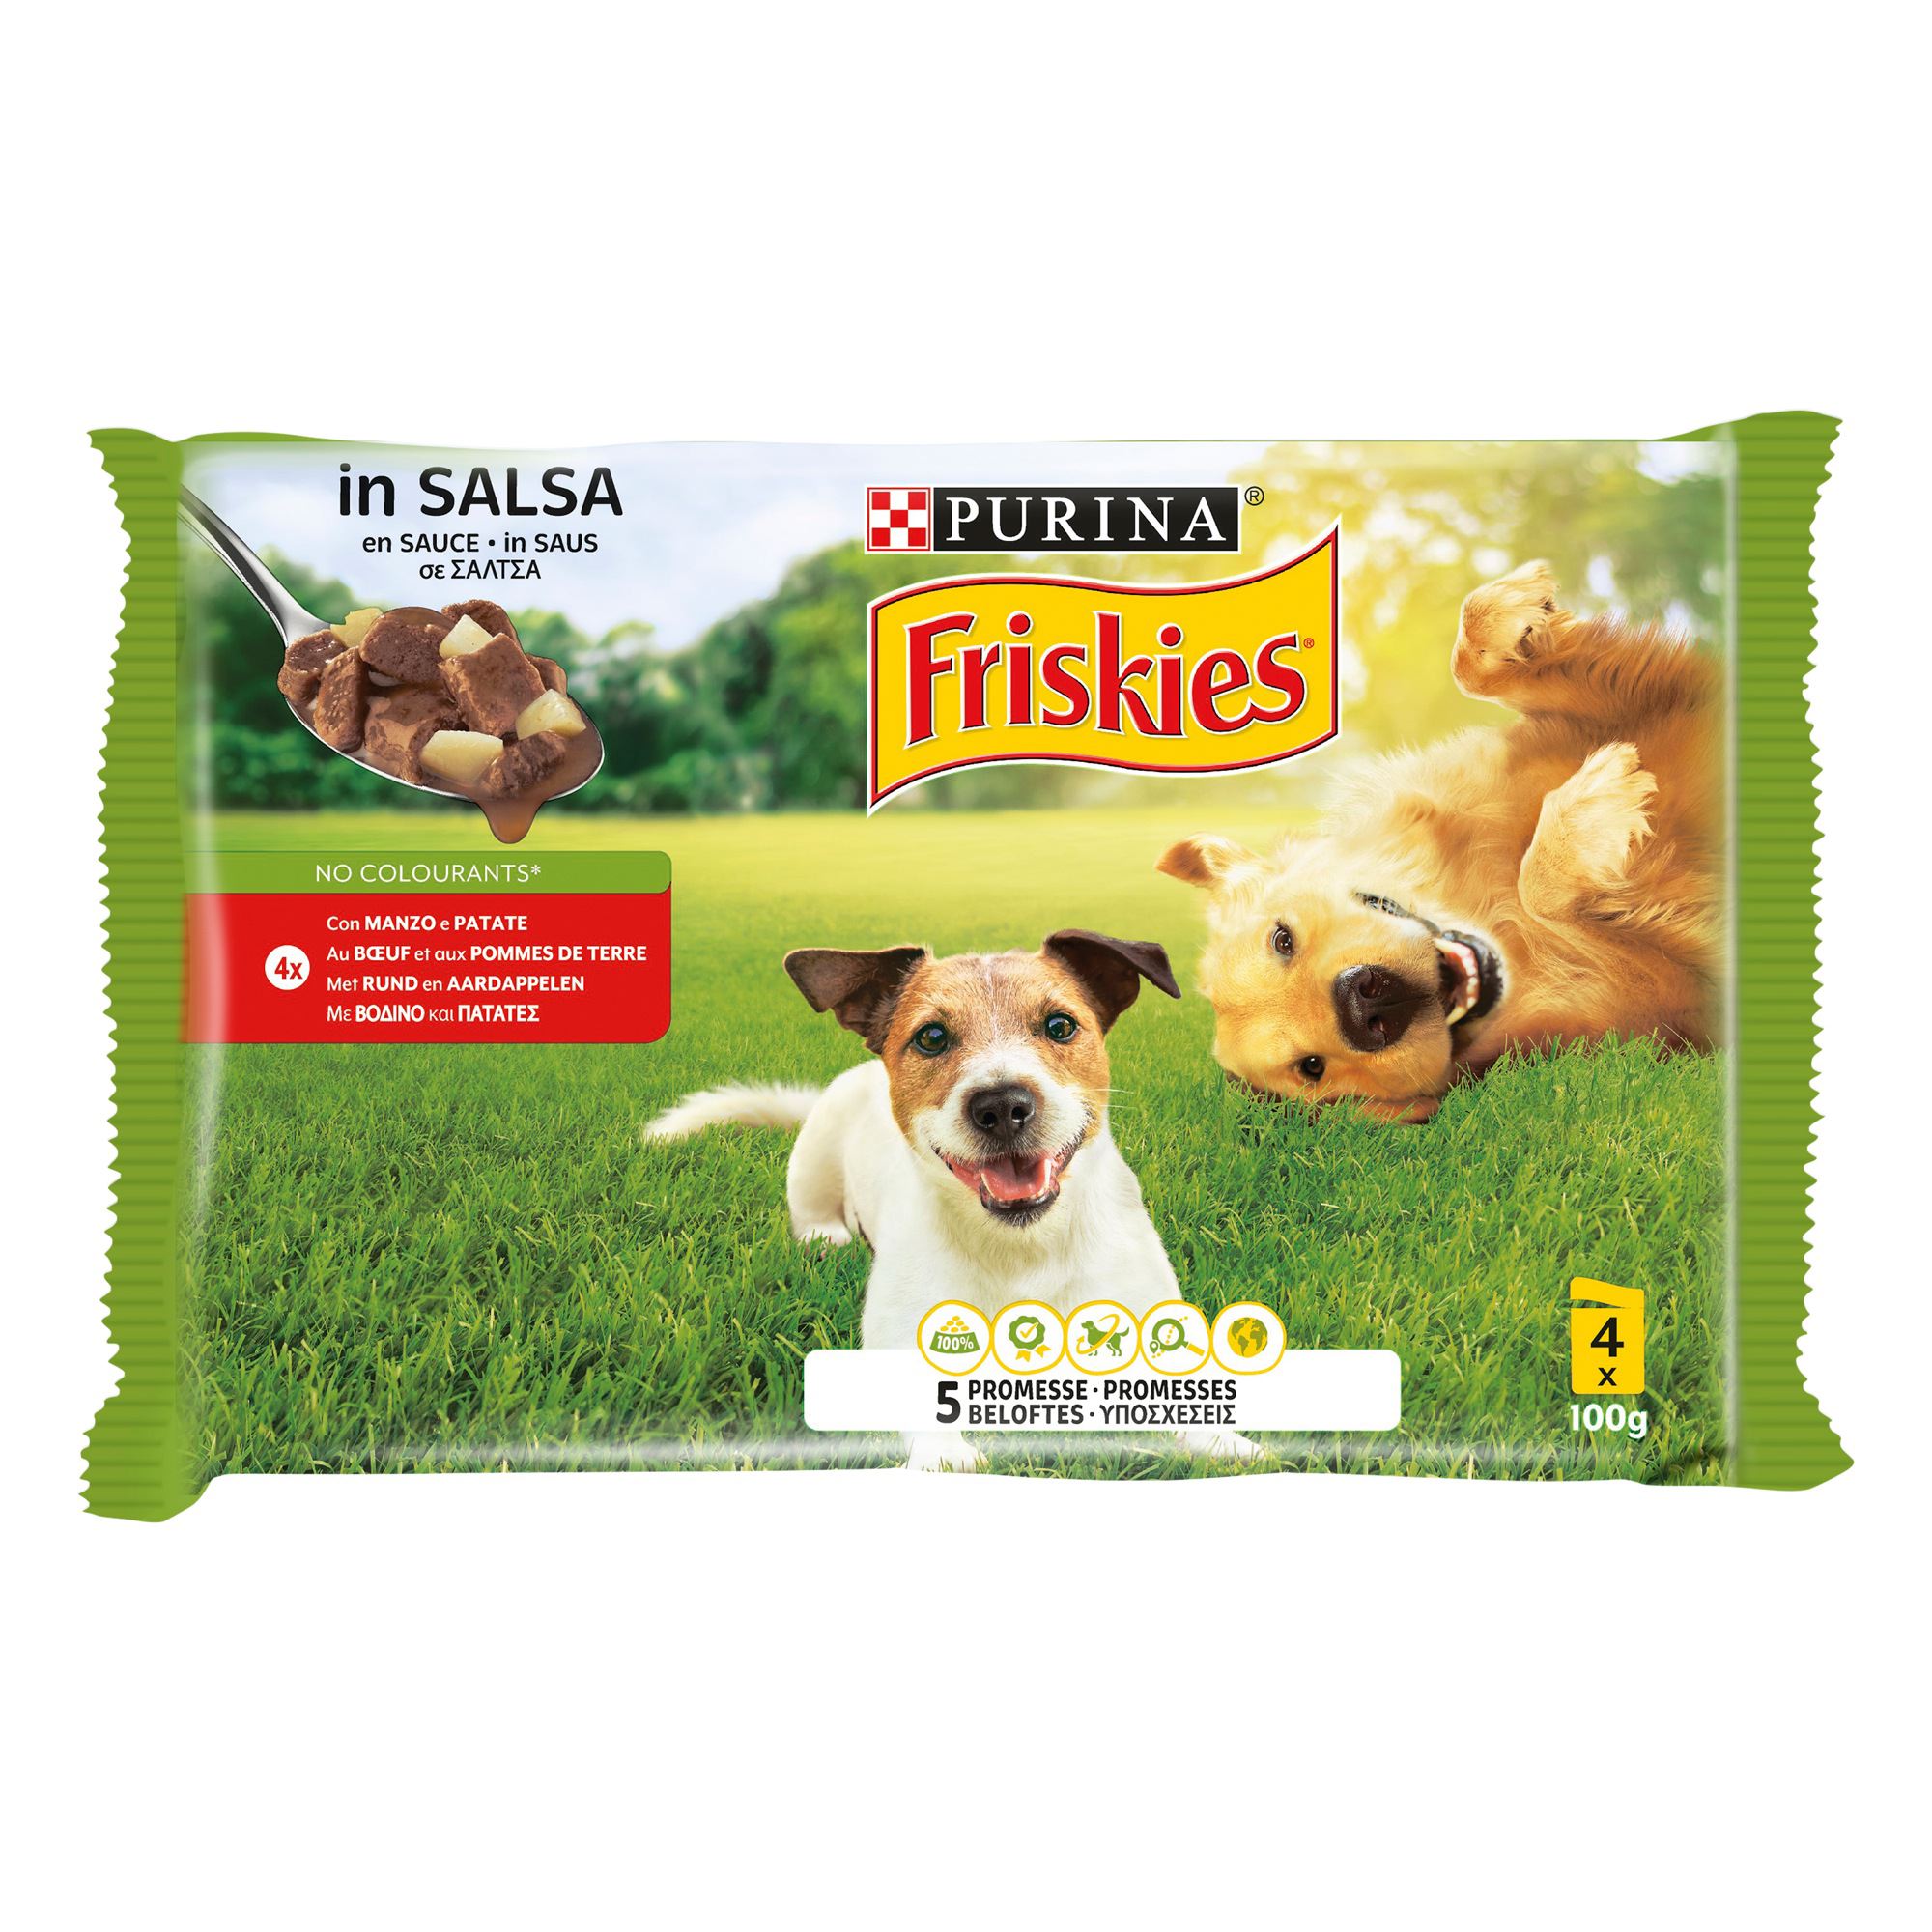 Nestle Τροφή για σκύλους σε Σάλτσα με Βοδινό & Πατάτες Friskies (4x100g)